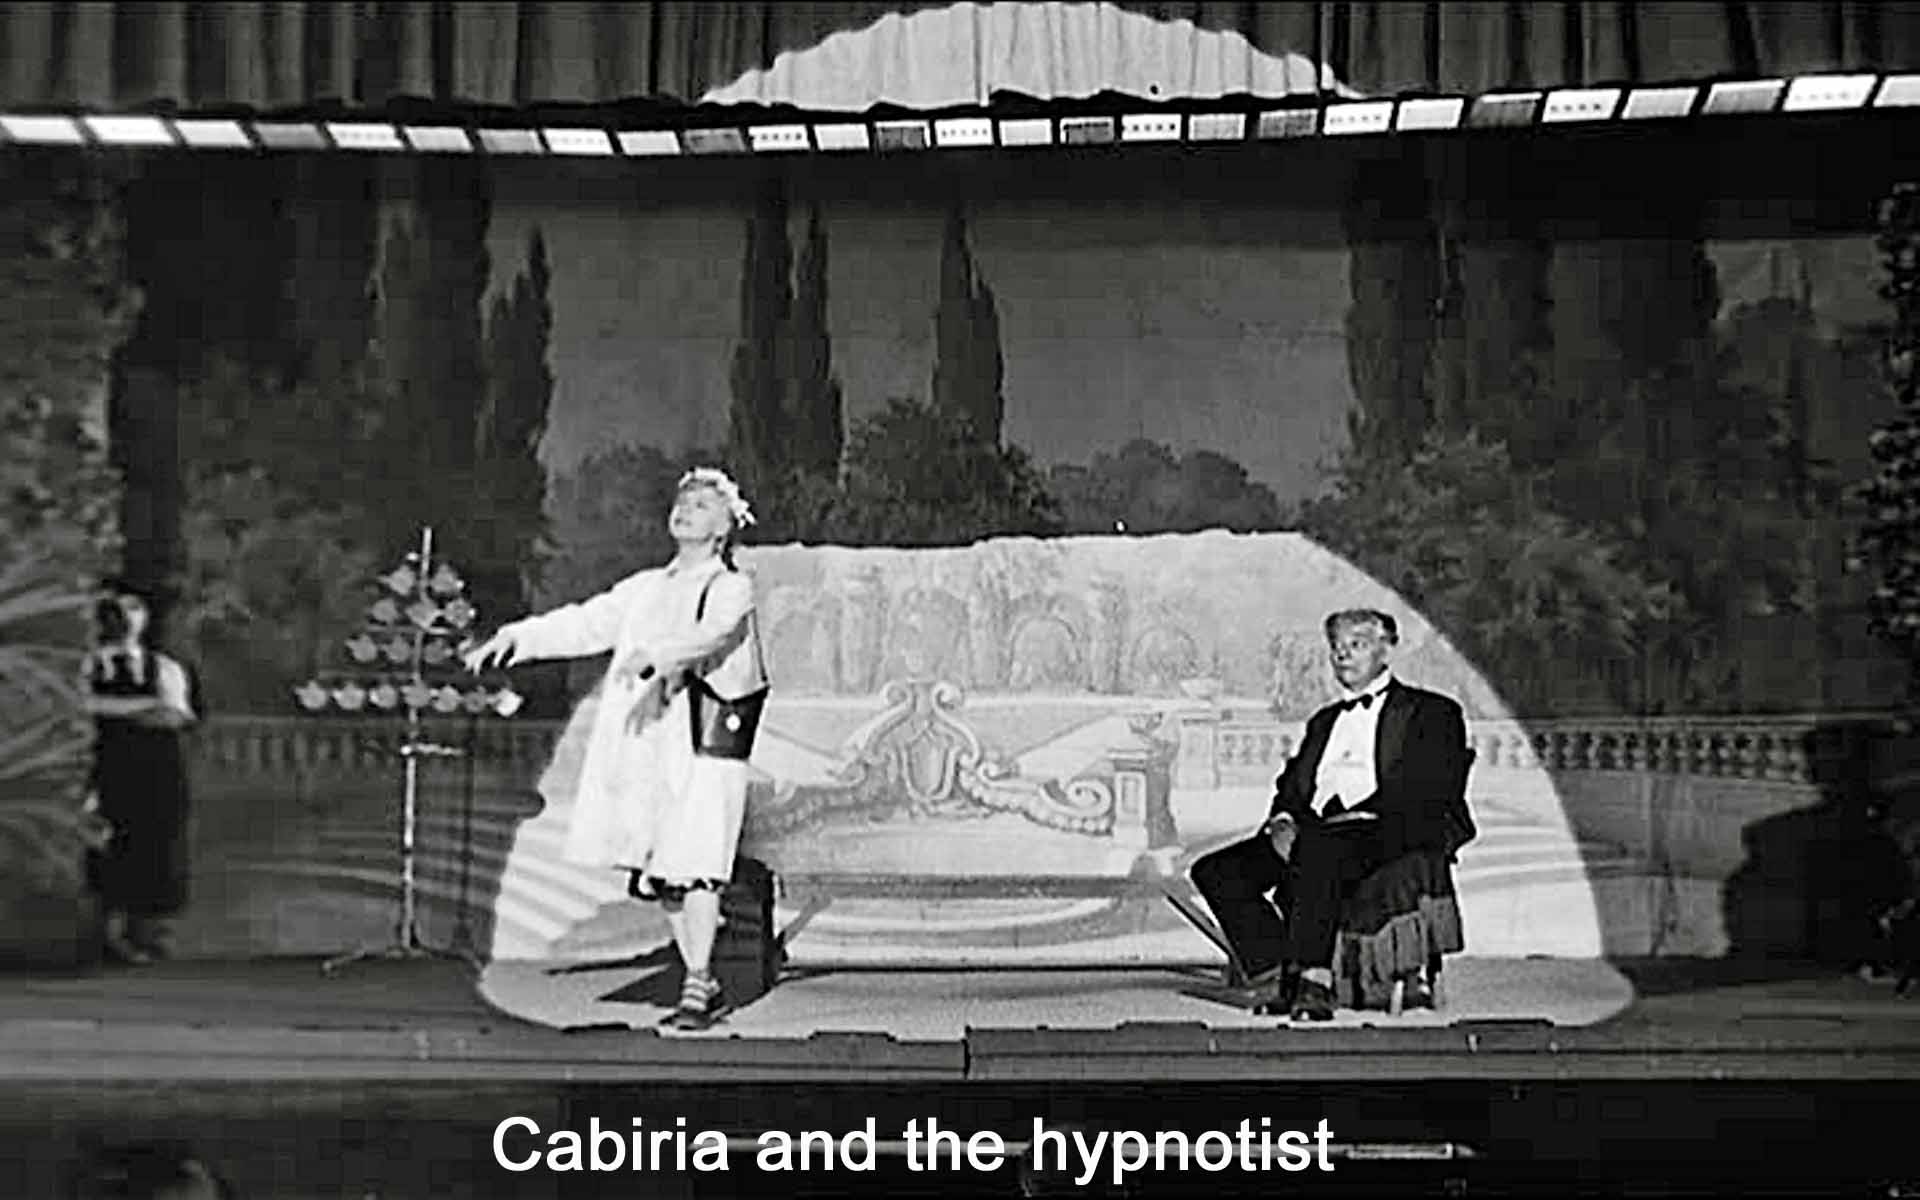 Cabiria and the hypnotist